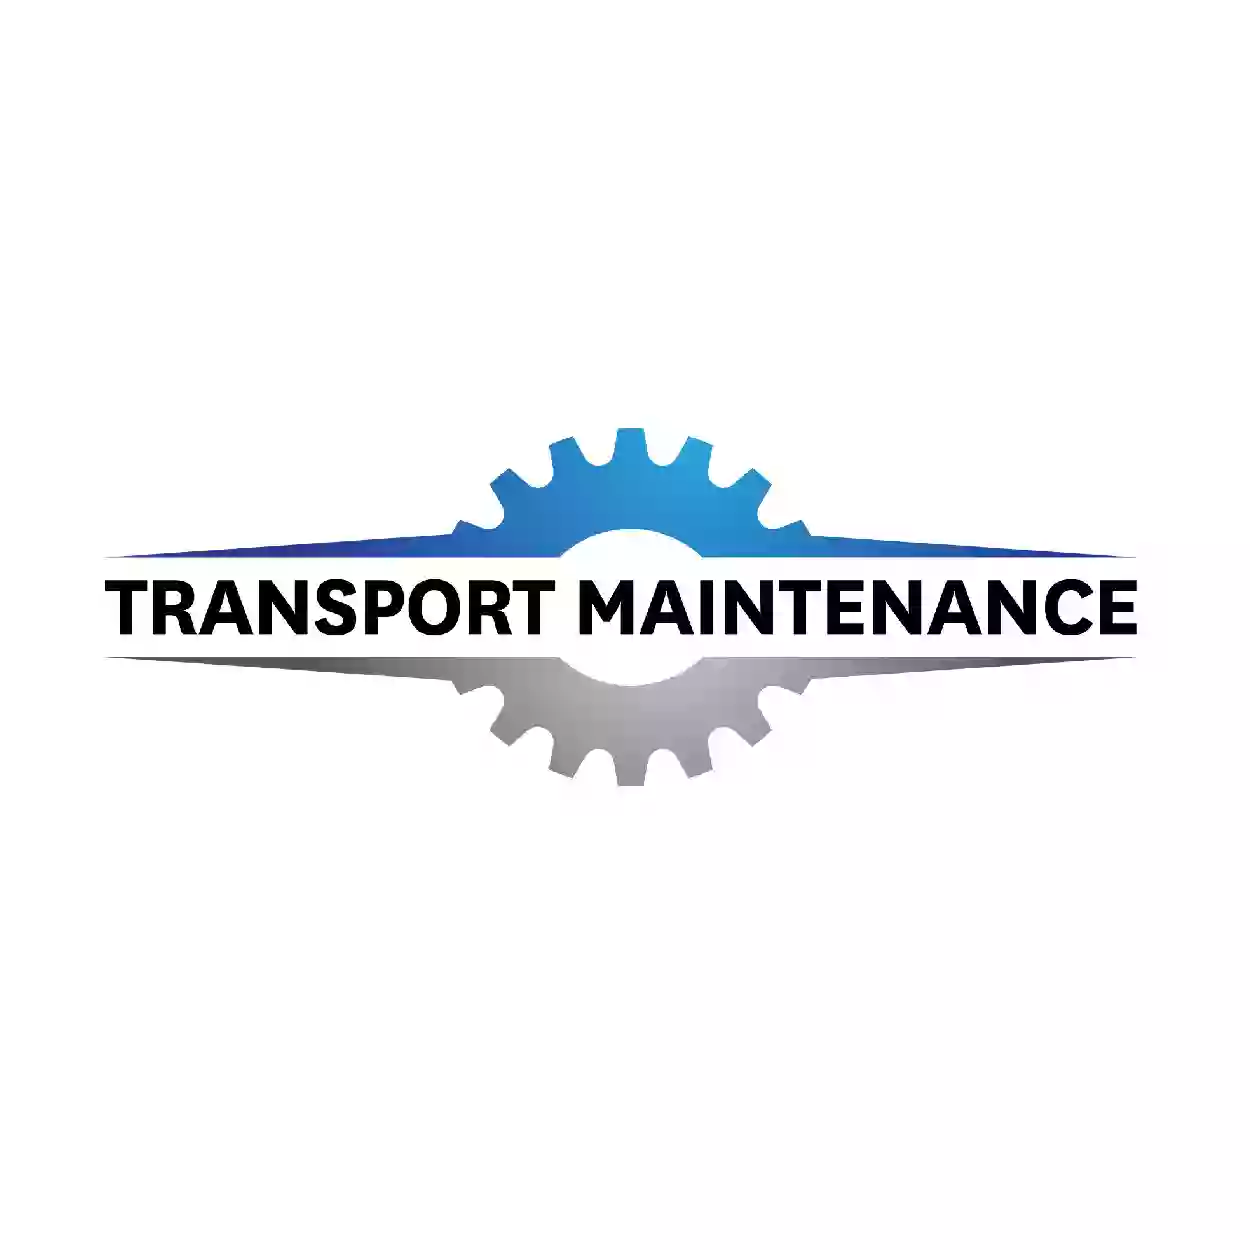 Transport Maintenance